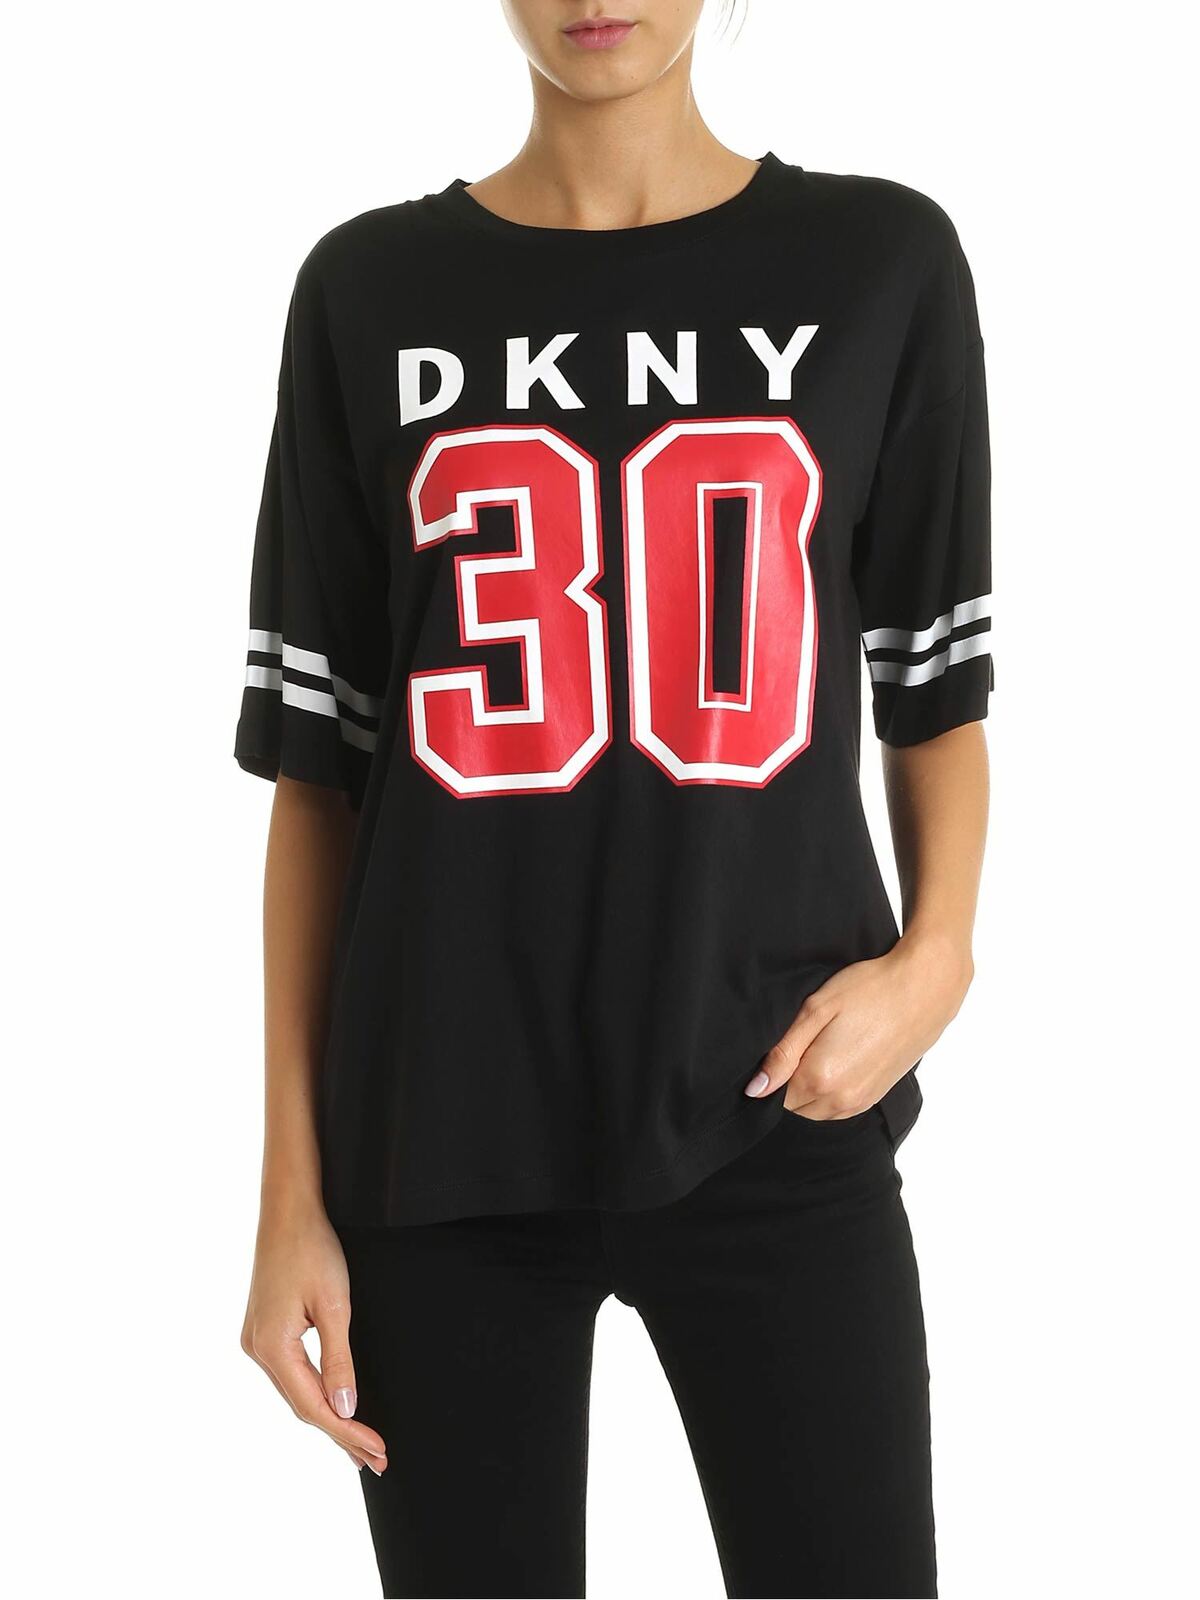 Dkny 30 T-shirt In Black